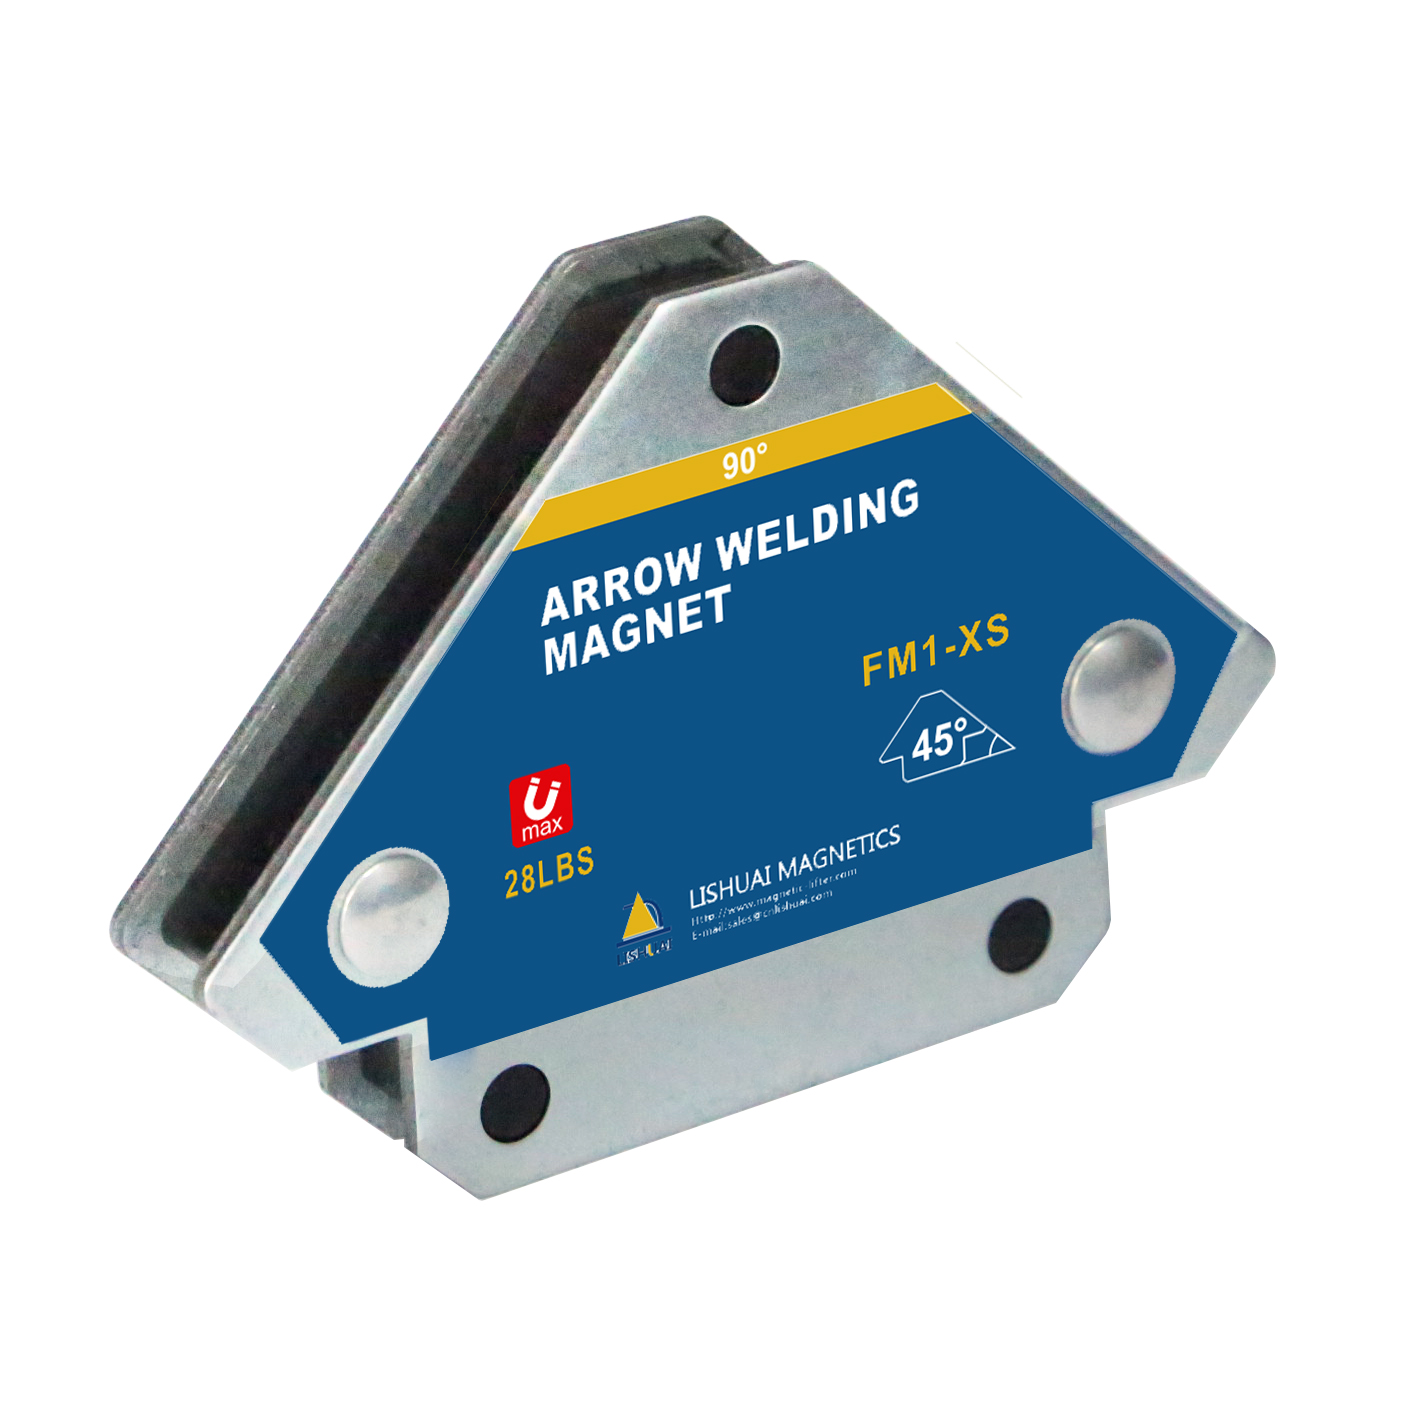 4psc 2 28lbs Mini Size Welding Magnet,Arrow welding holder 